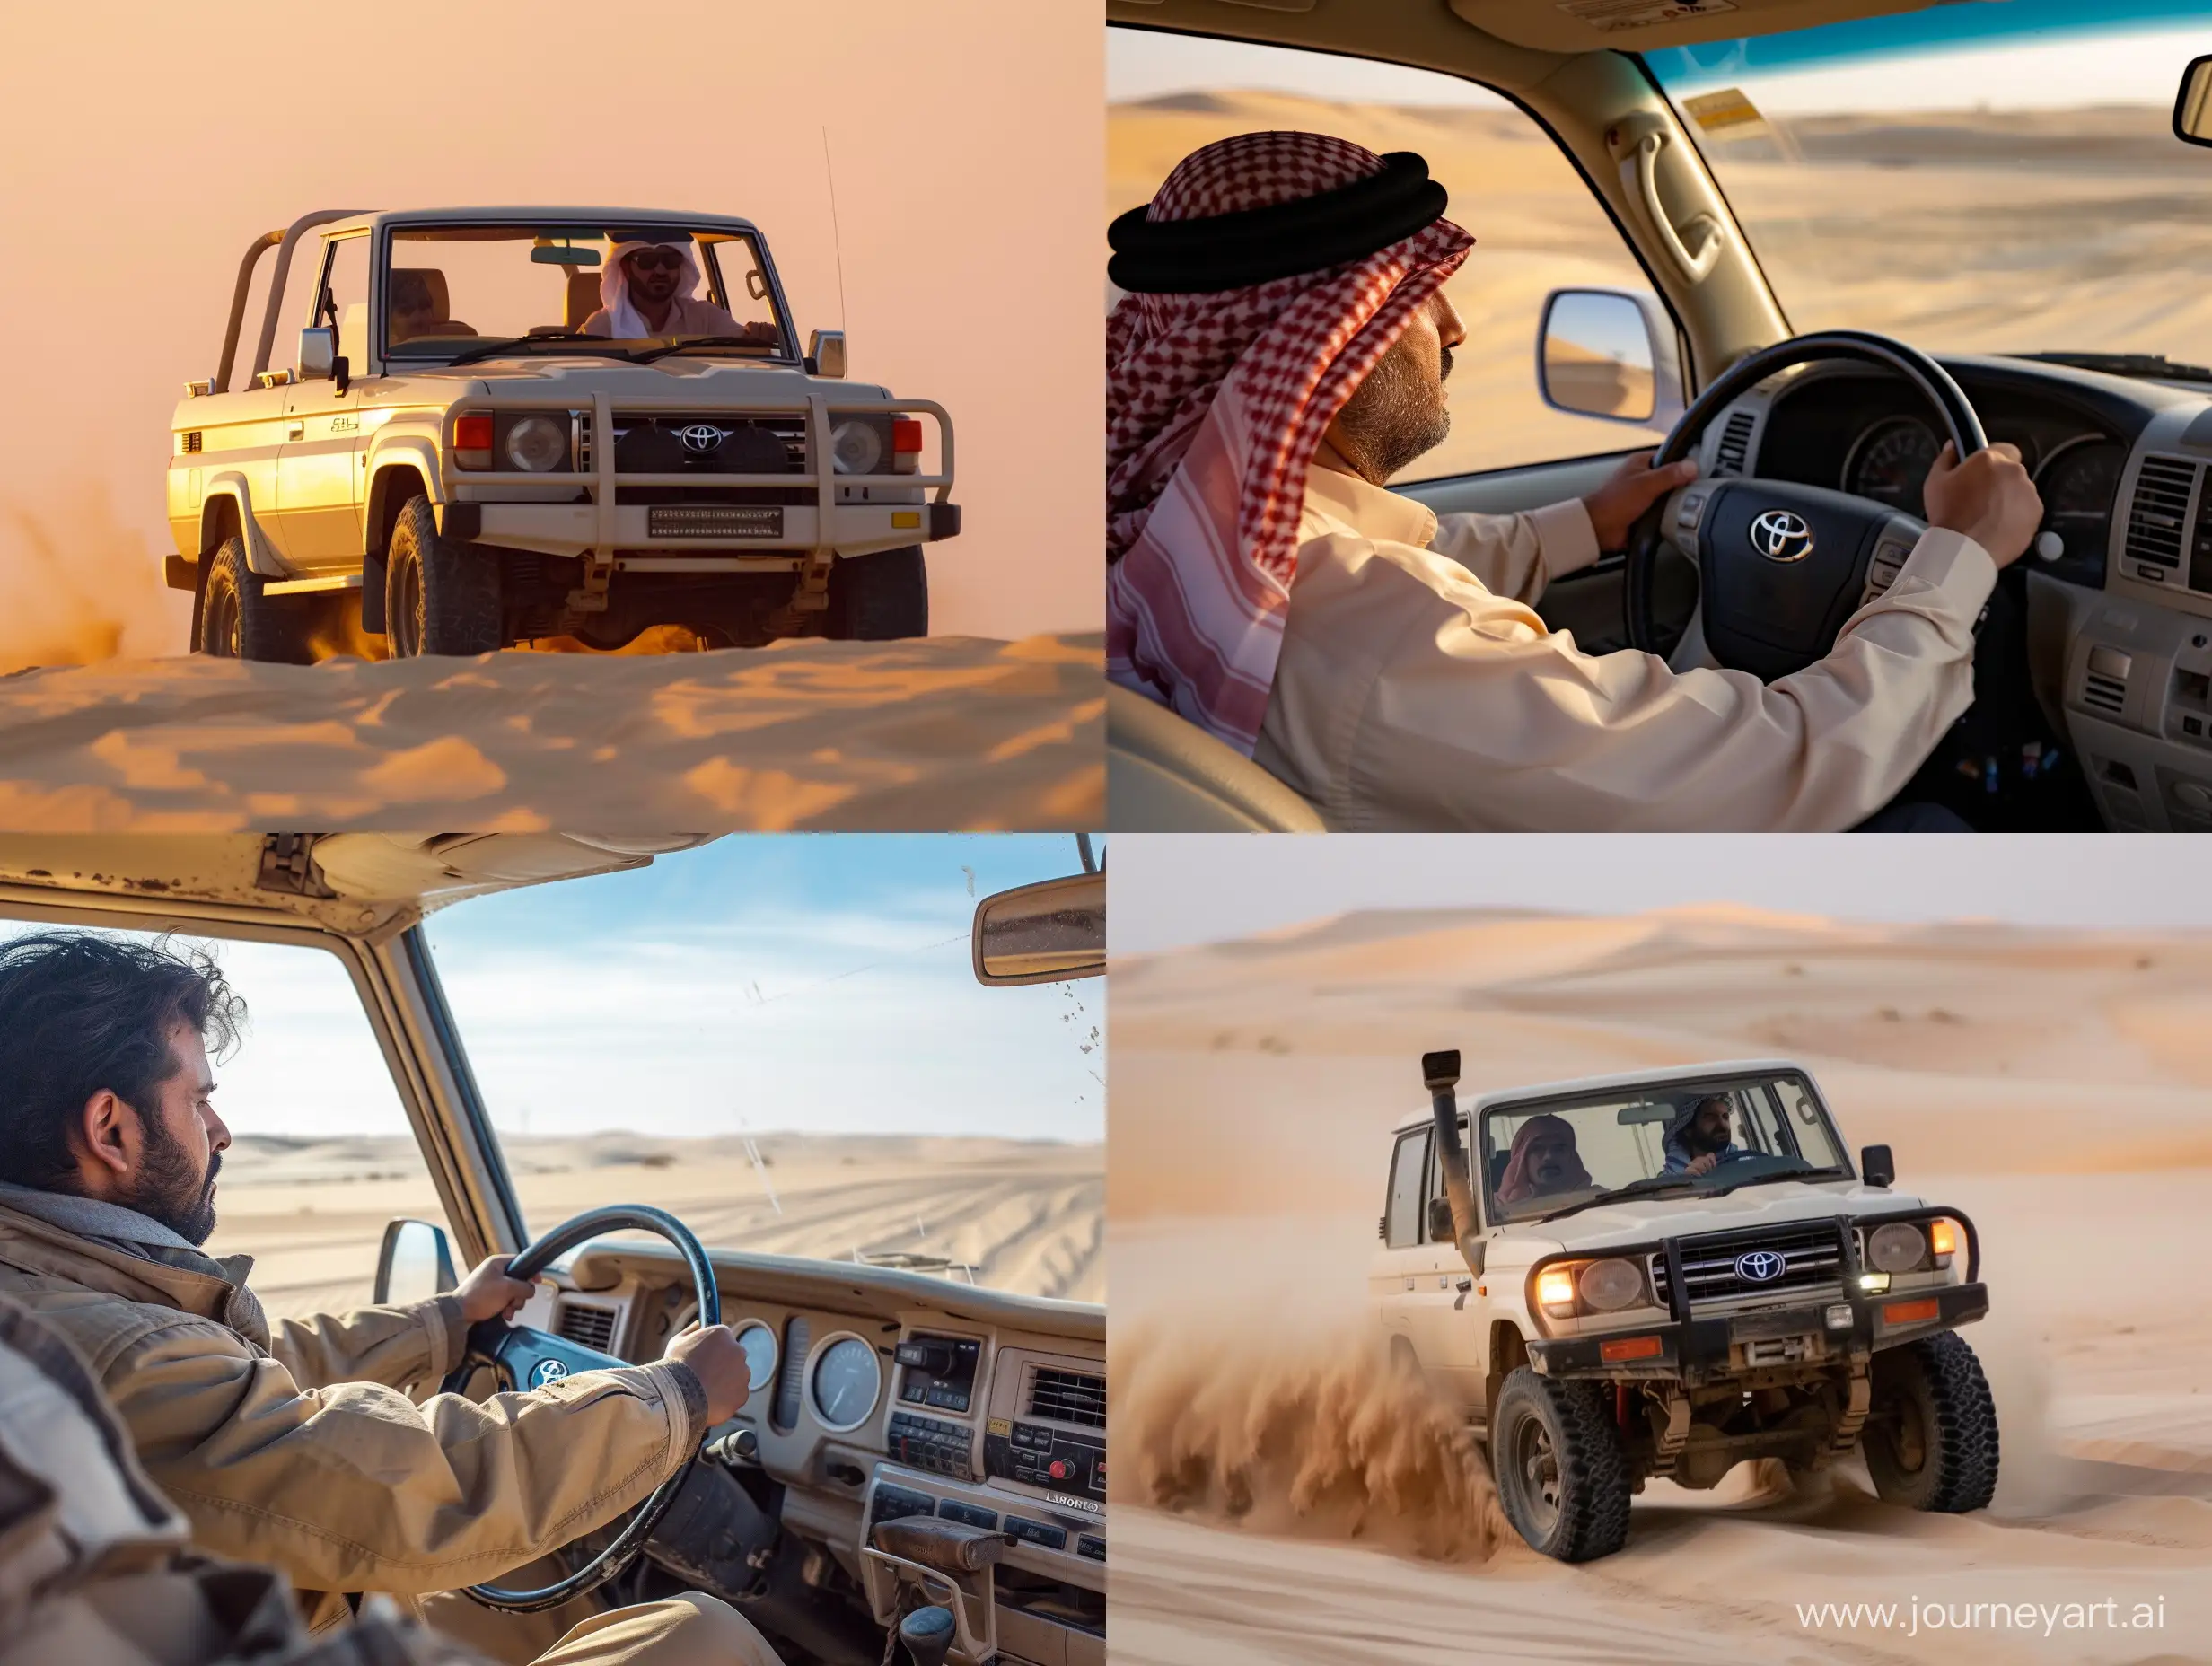 Saudi-Man-Driving-Land-Cruiser-Across-Desert-Sands